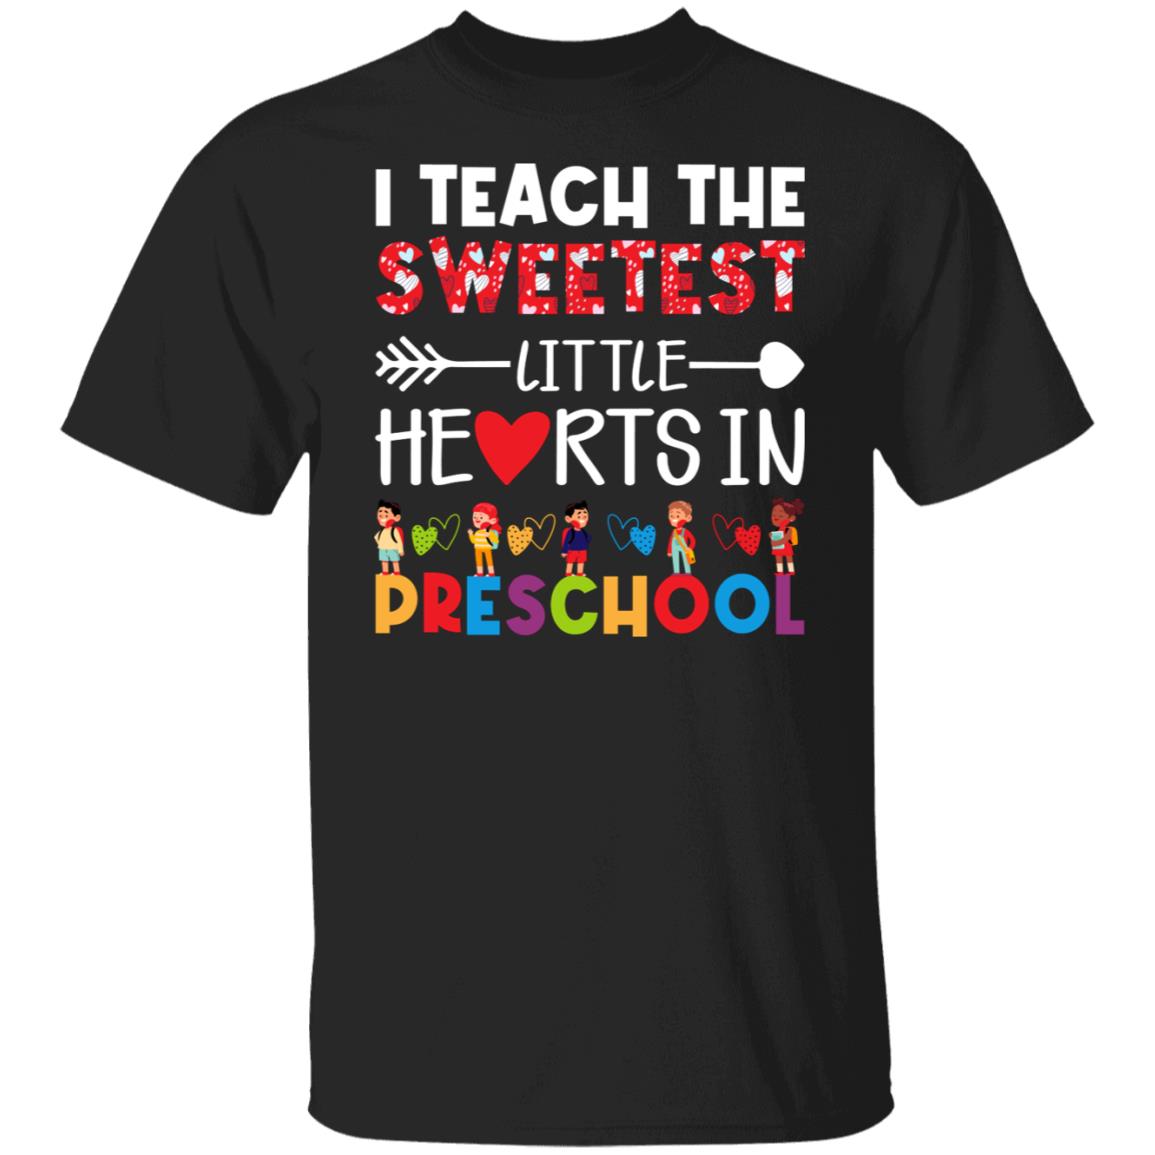 I Teach The Sweetest Little Hearts in Preschool Teacher Shirt